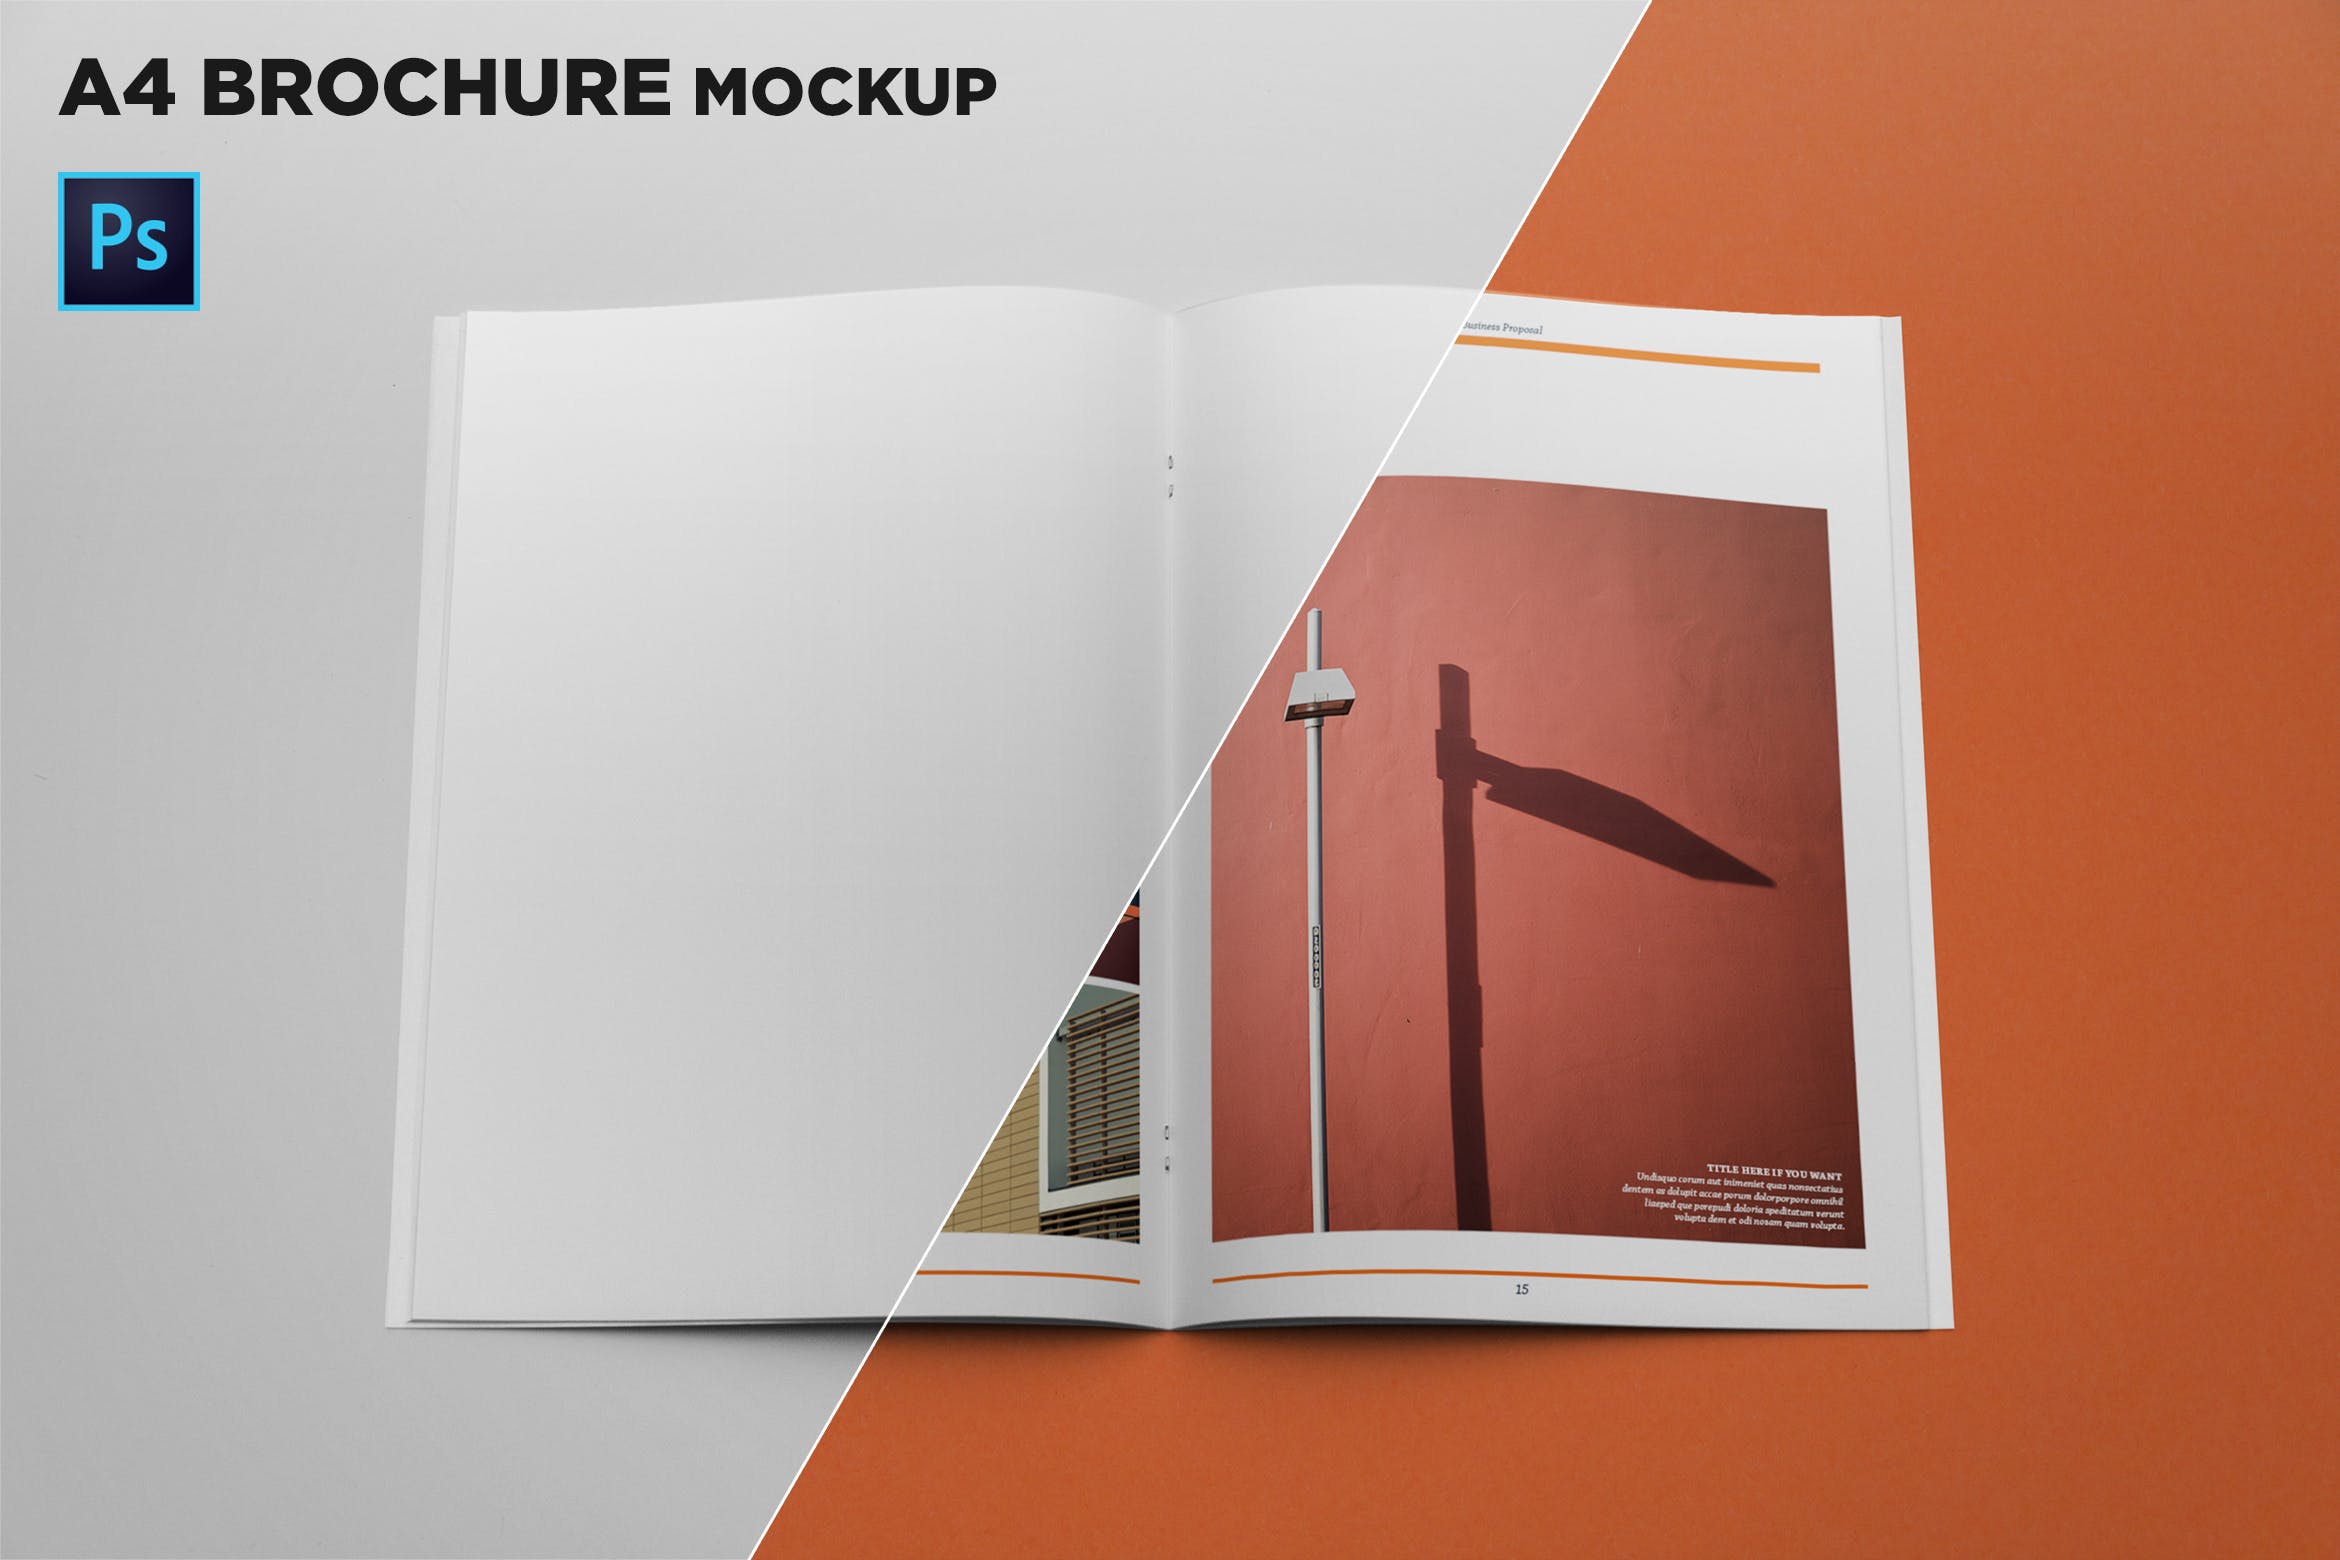 A4宣传小册子/企业画册内页设计顶视图样机大洋岛精选 A4 Brochure Mockup Top View插图